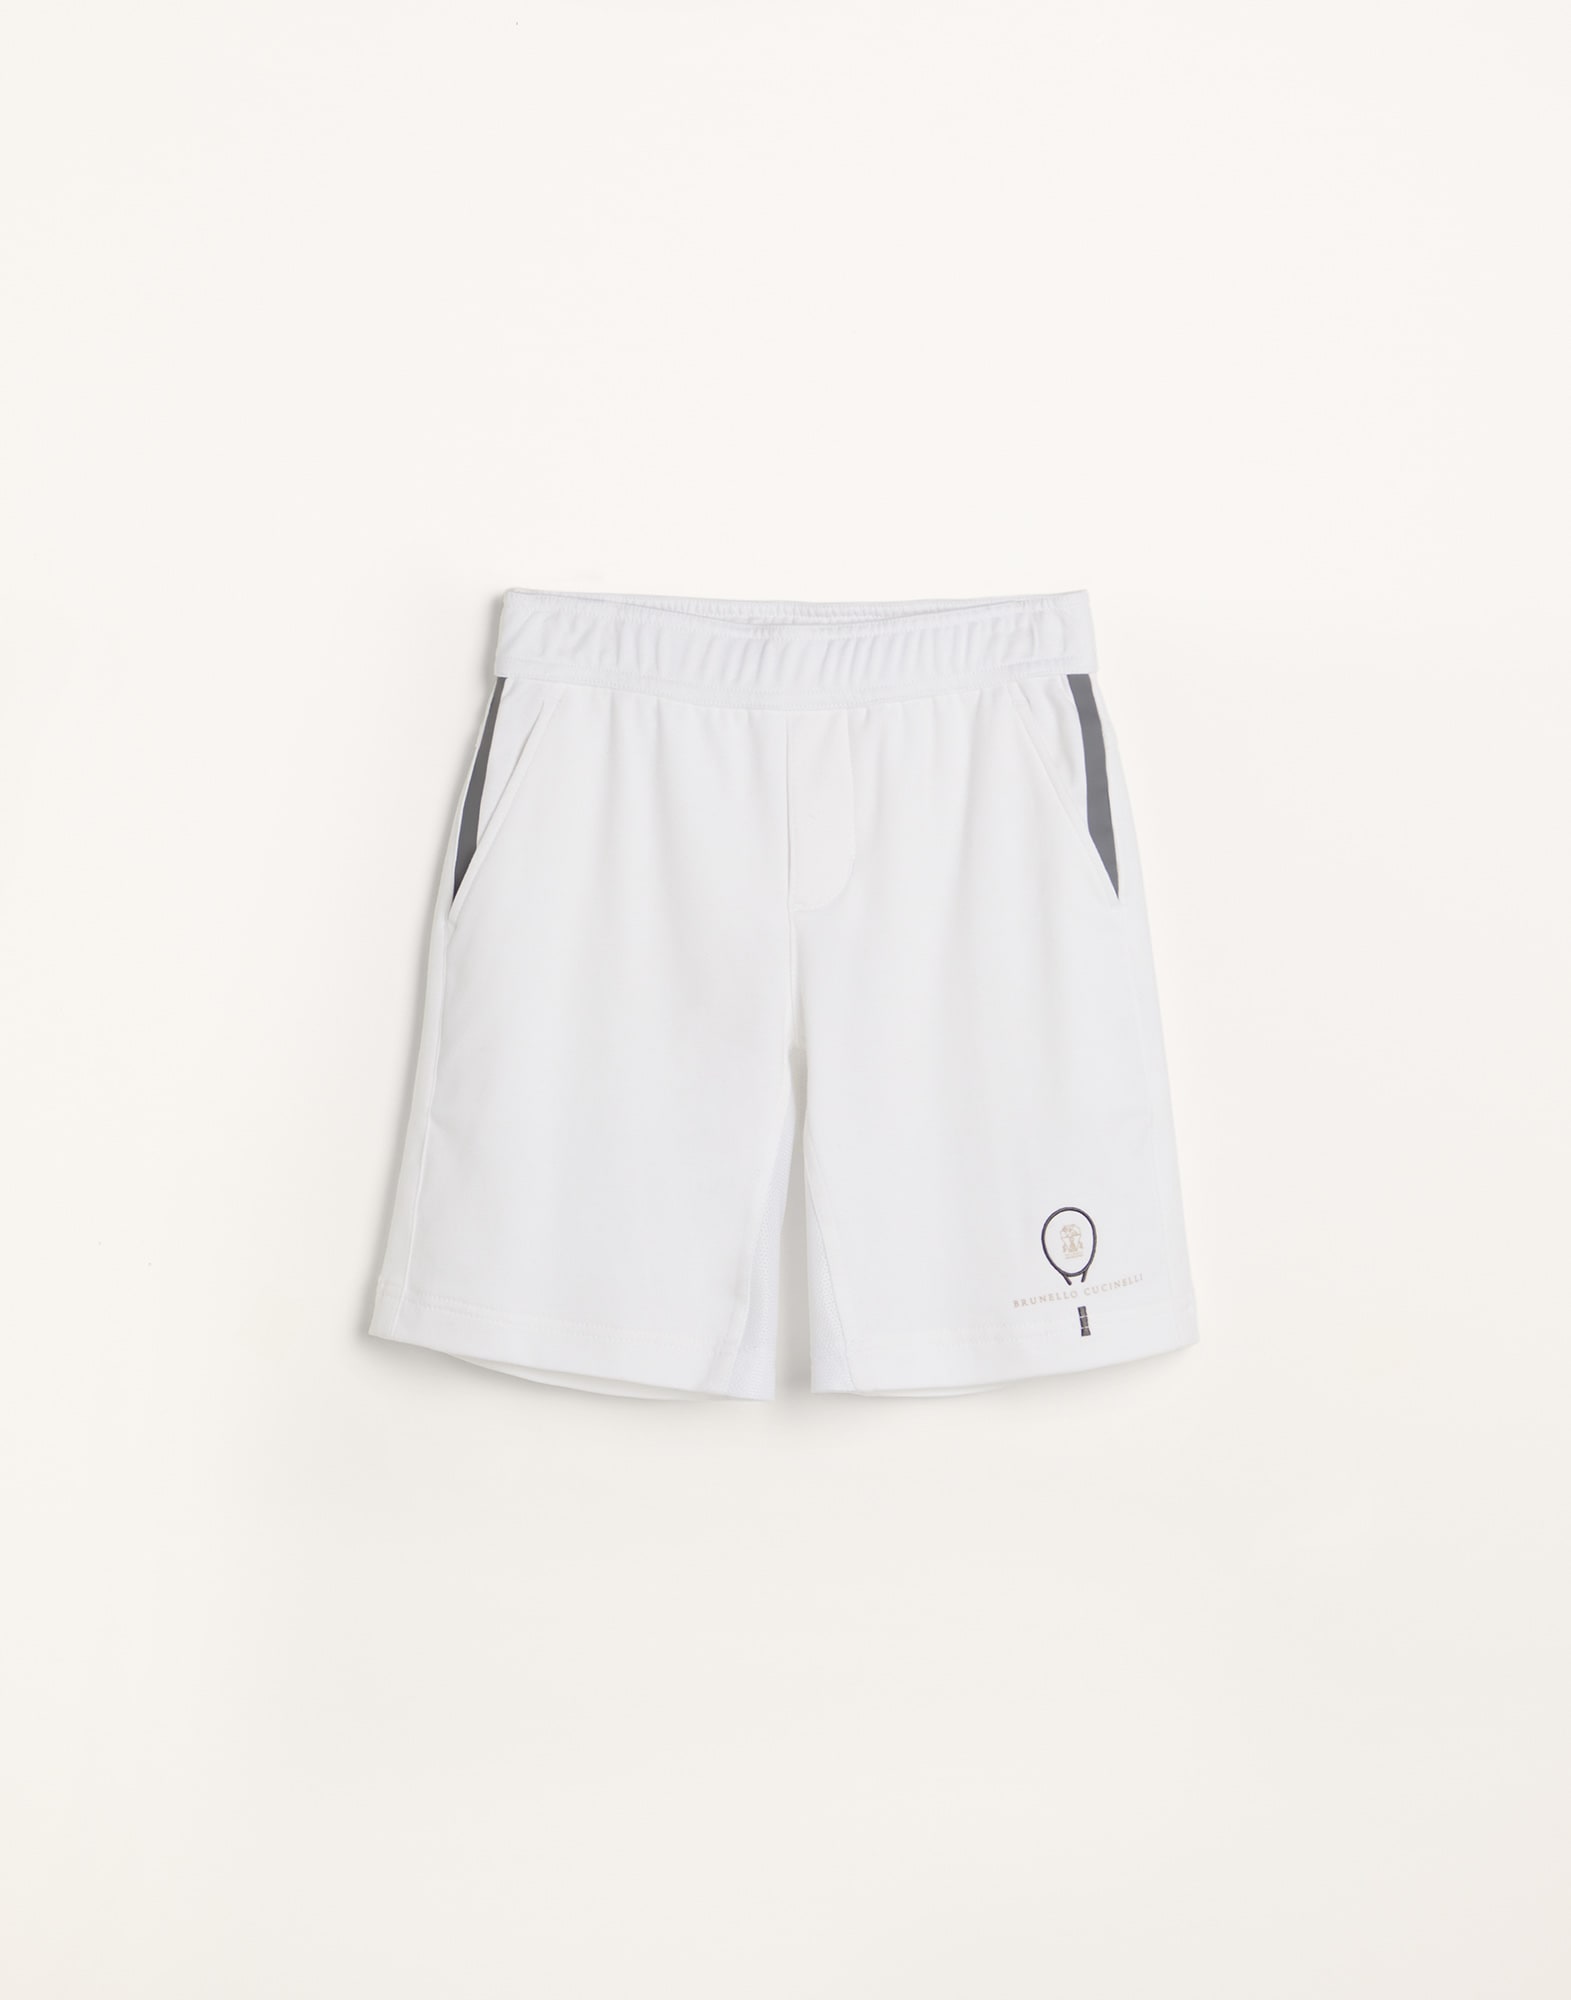 Bermuda shorts with Tennis logo